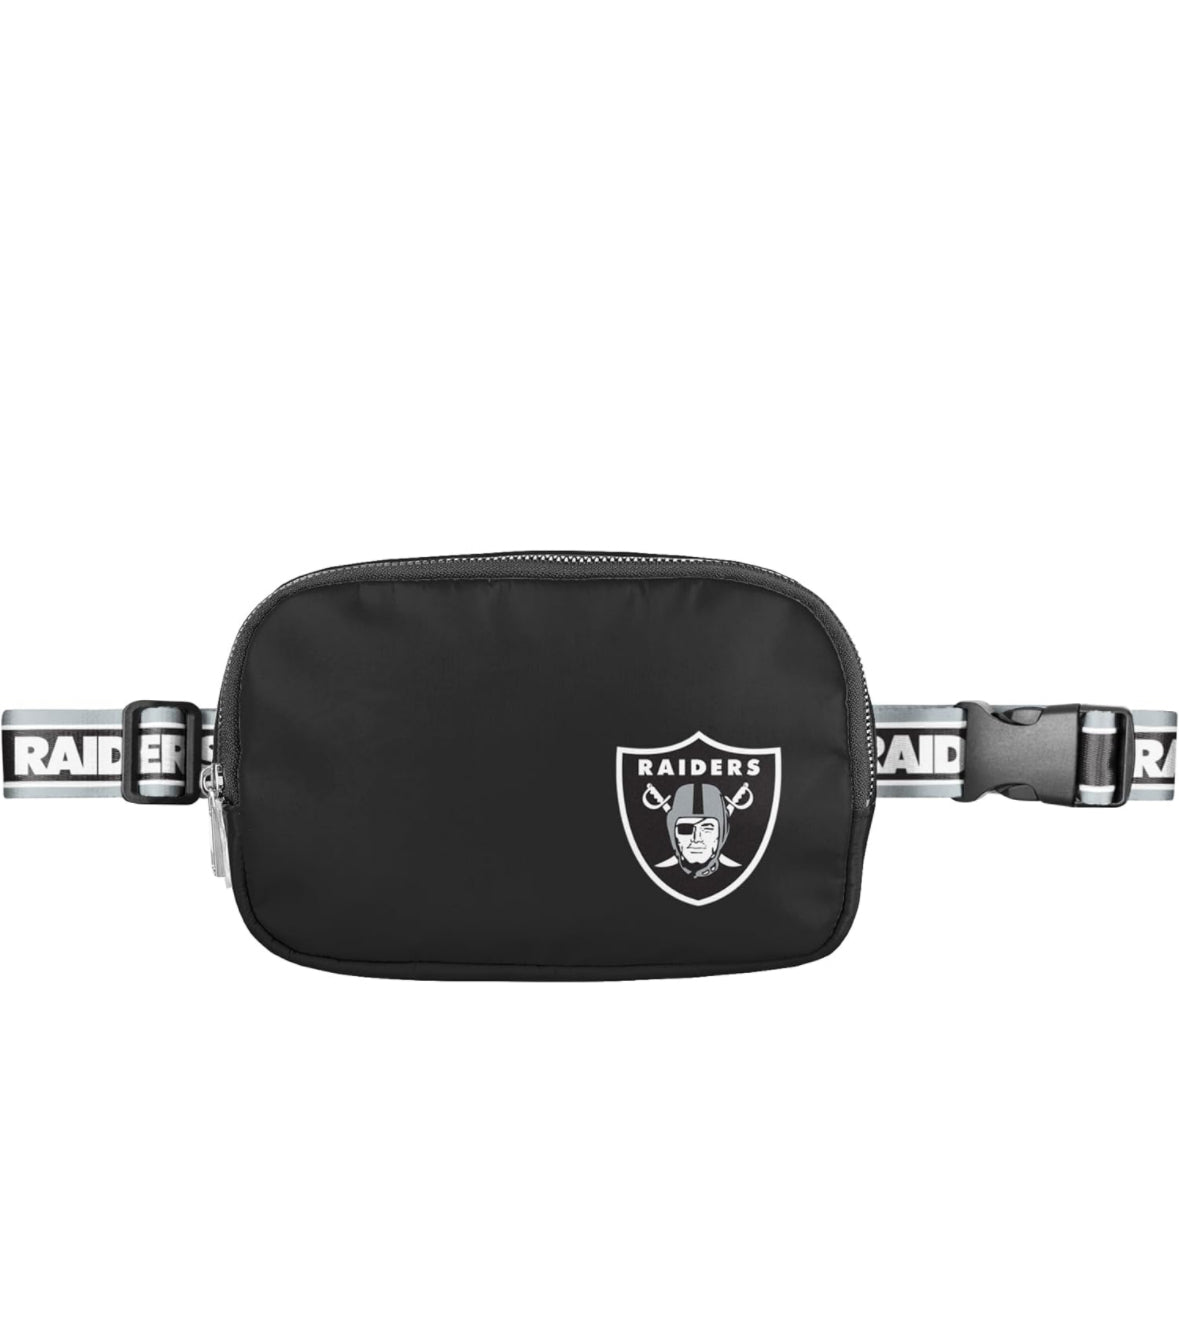 Raider NFL Unisex-Adult NFL Team Color Crossbody Belt Bag